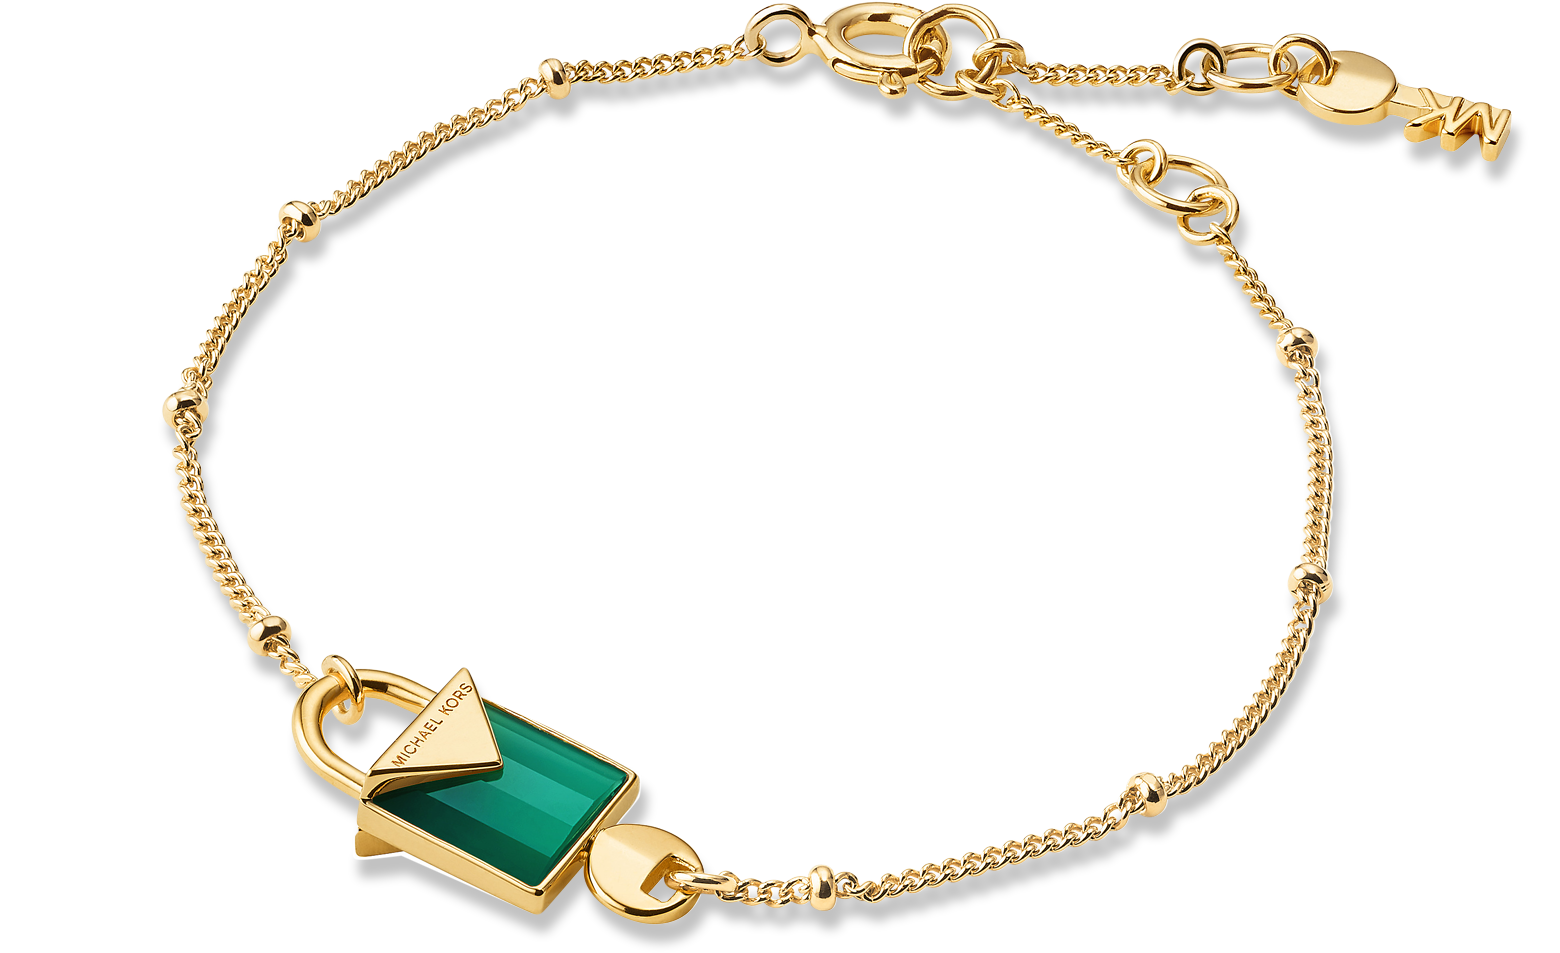 michael kors silver lock bracelet